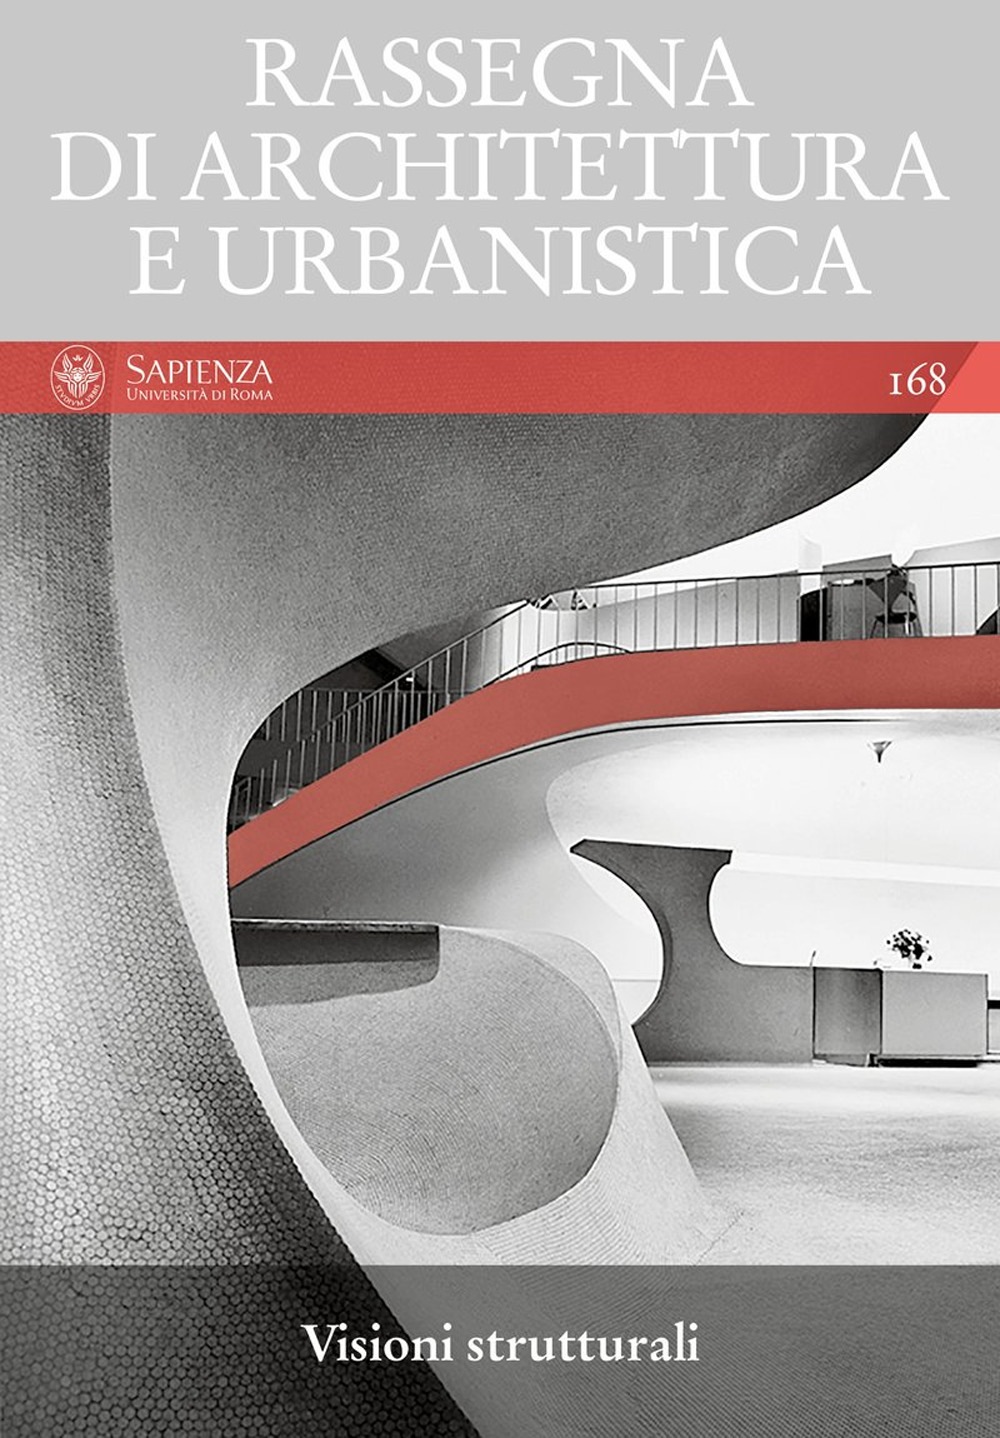 Rassegna di architettura e urbanistica. Vol. 168: Visioni stutturali